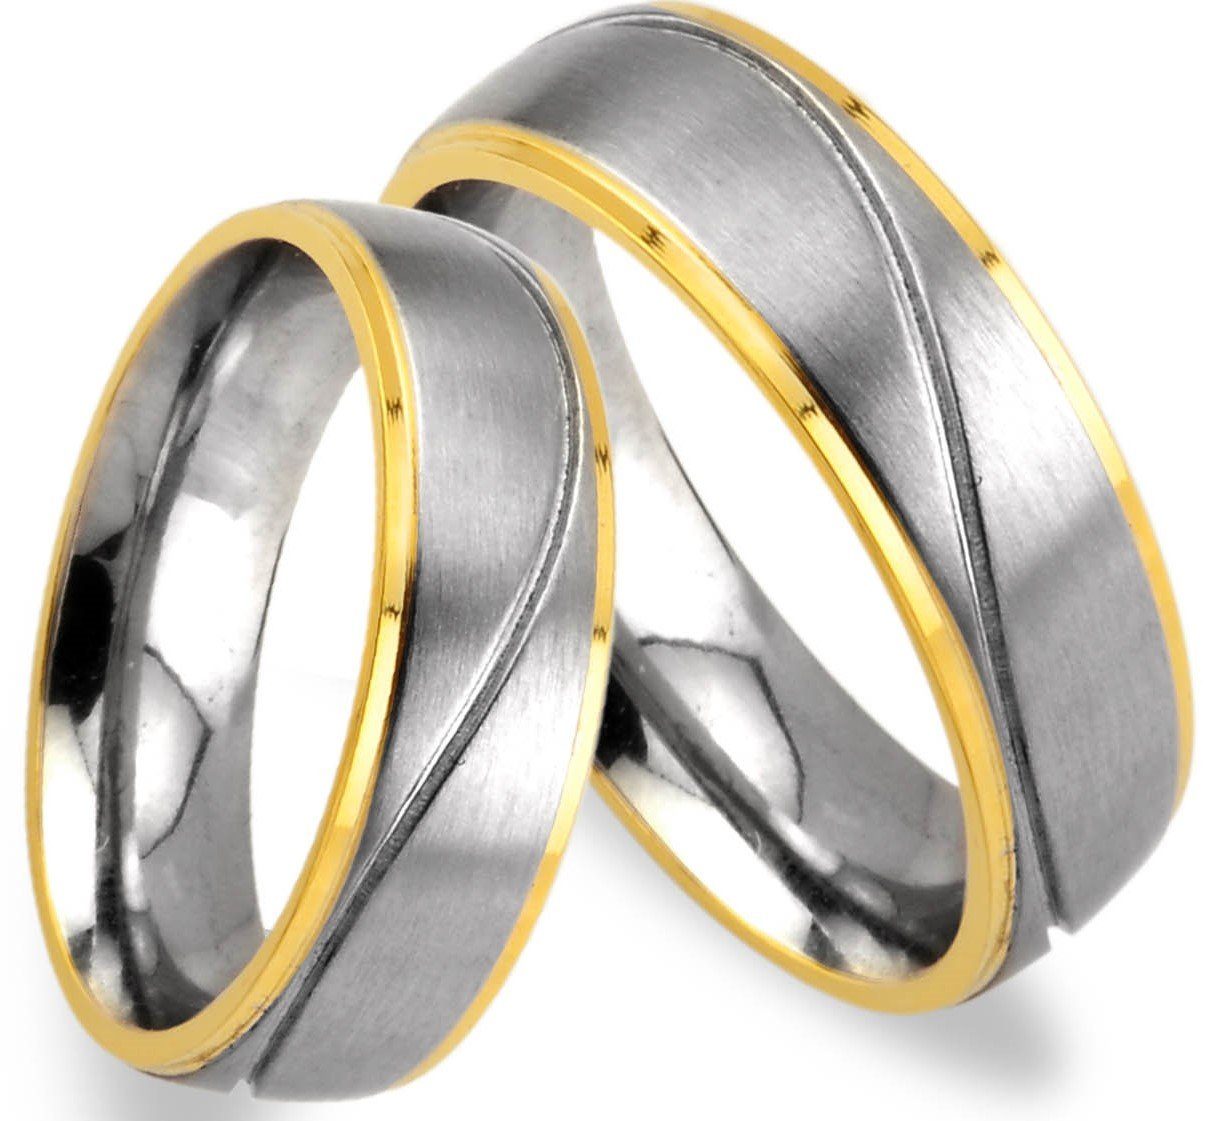 Gold Eheringe Trauringe123 Hochzeitsringe Trauringe platiert Partnerringe JE20 Trauring Verlobungsringe